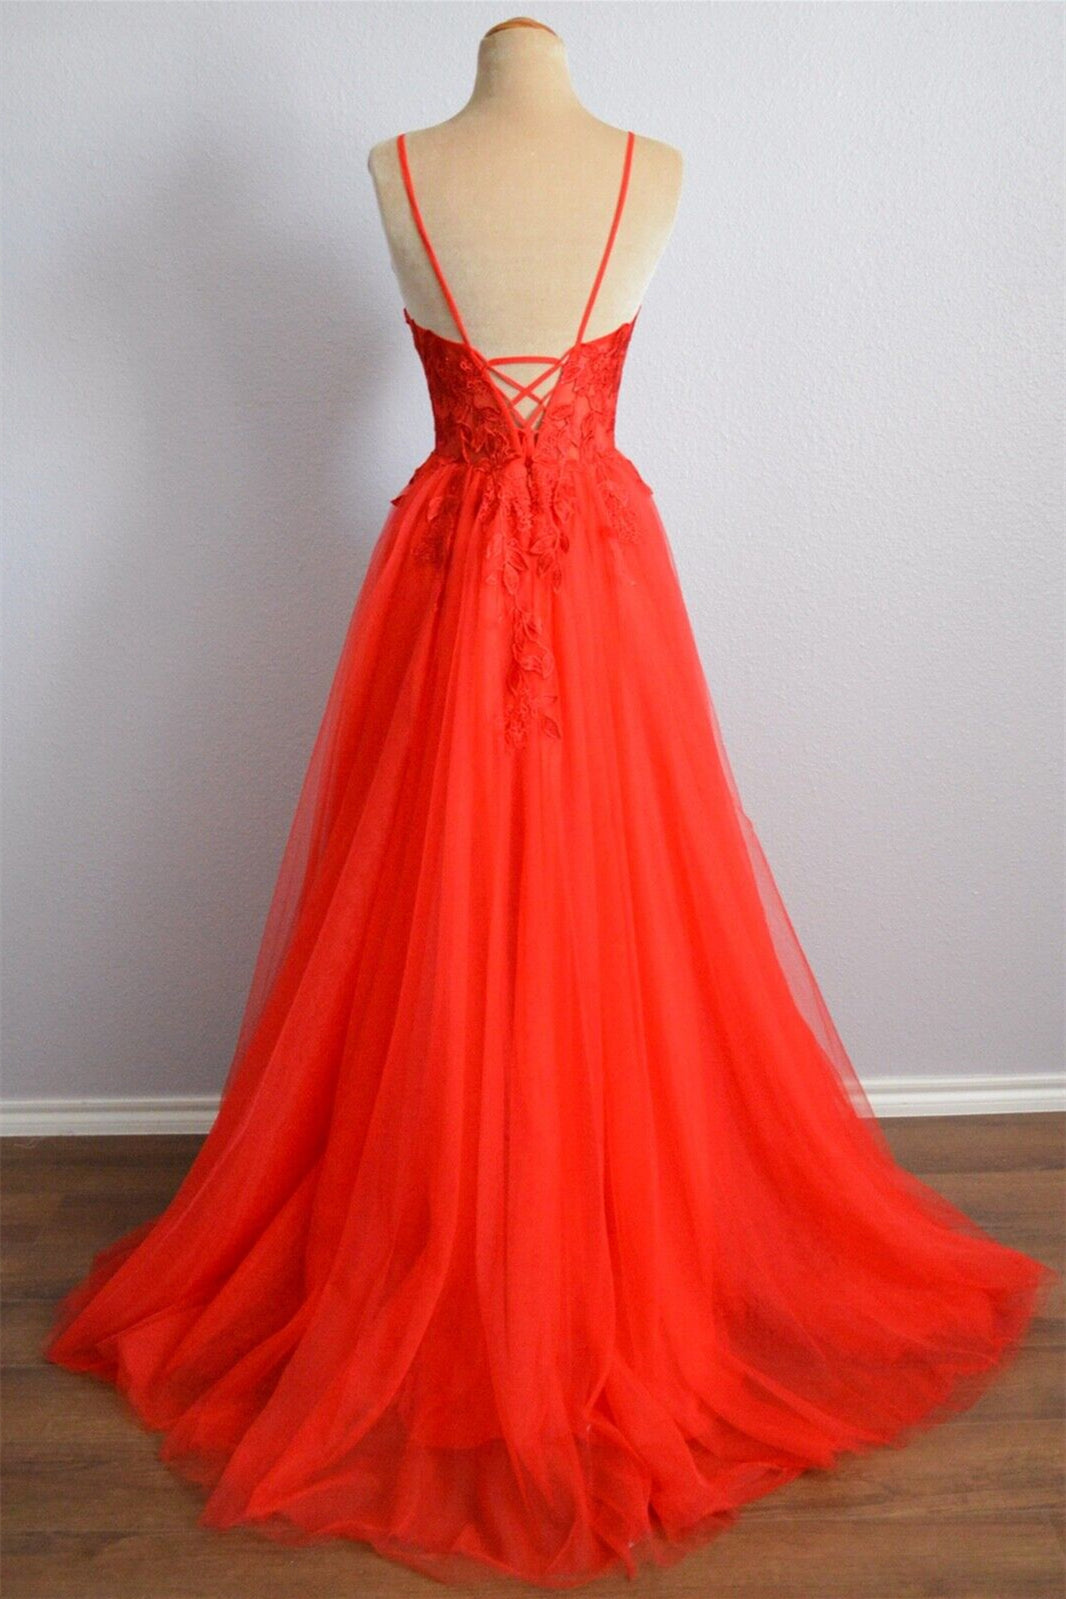 Reddish-Orange A-line Spaghetti Straps Lace Backless Long Prom Dress